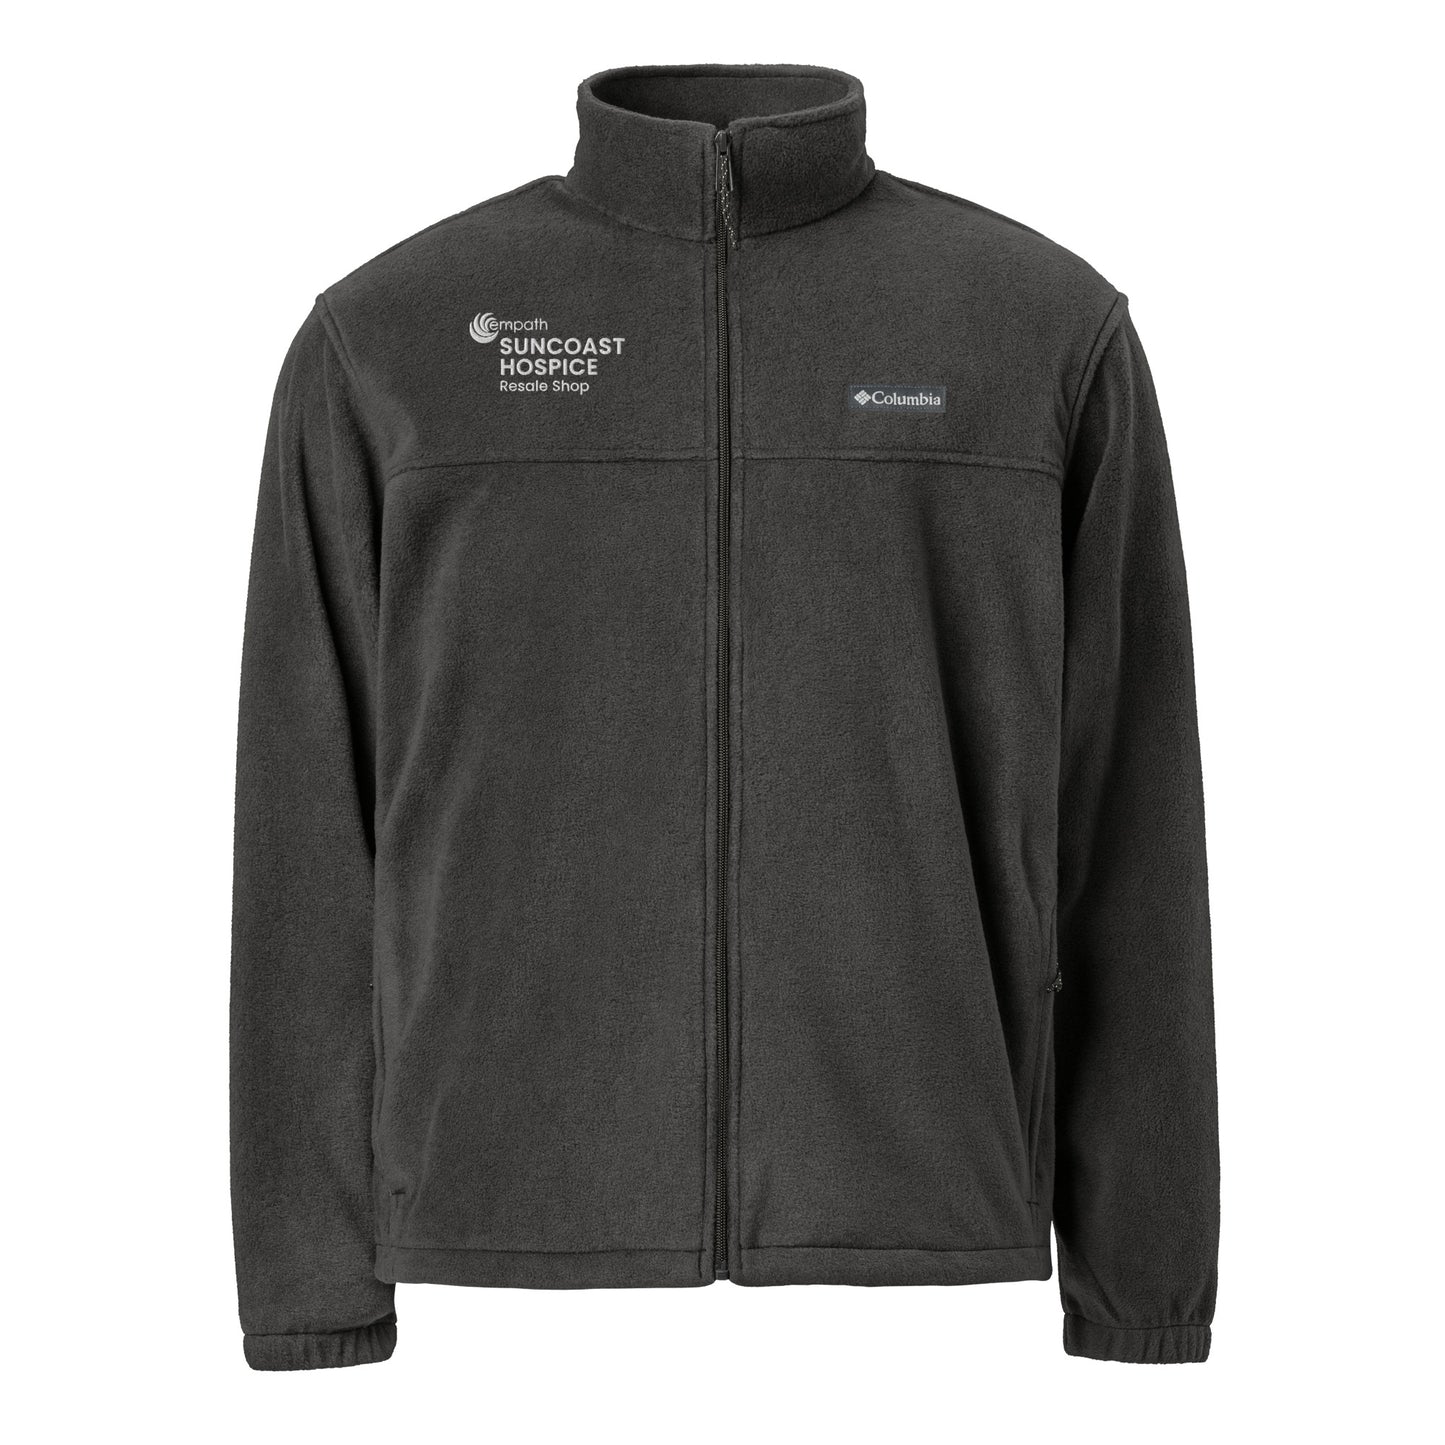 Columbia | Unisex fleece jacket (relaxed fit) - Suncoast Hospice Resale Shop